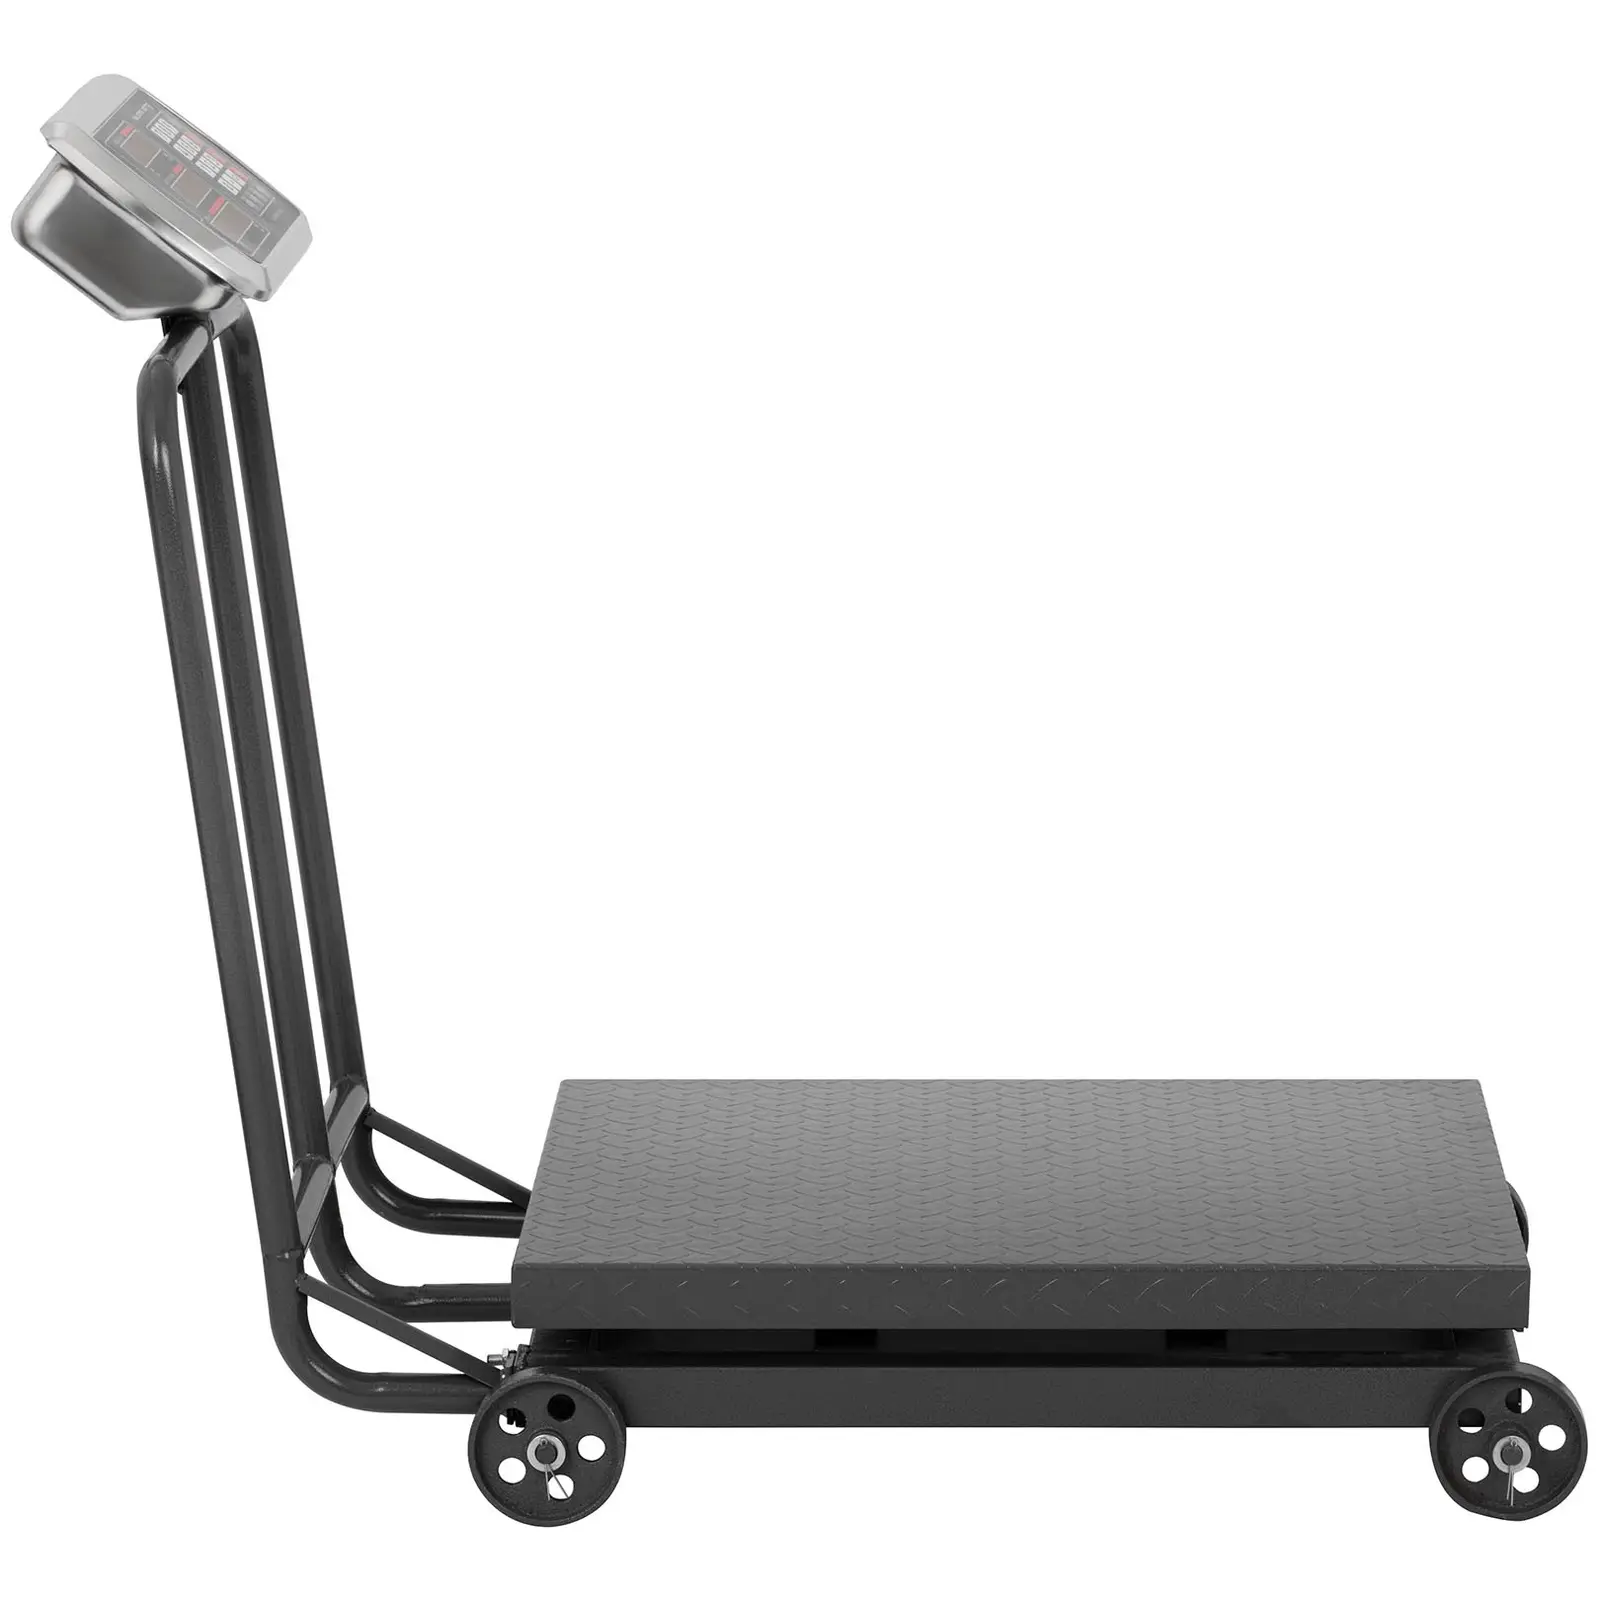 Báscula de plataforma - 600 kg / 100 g - con ruedas - pantalla LED